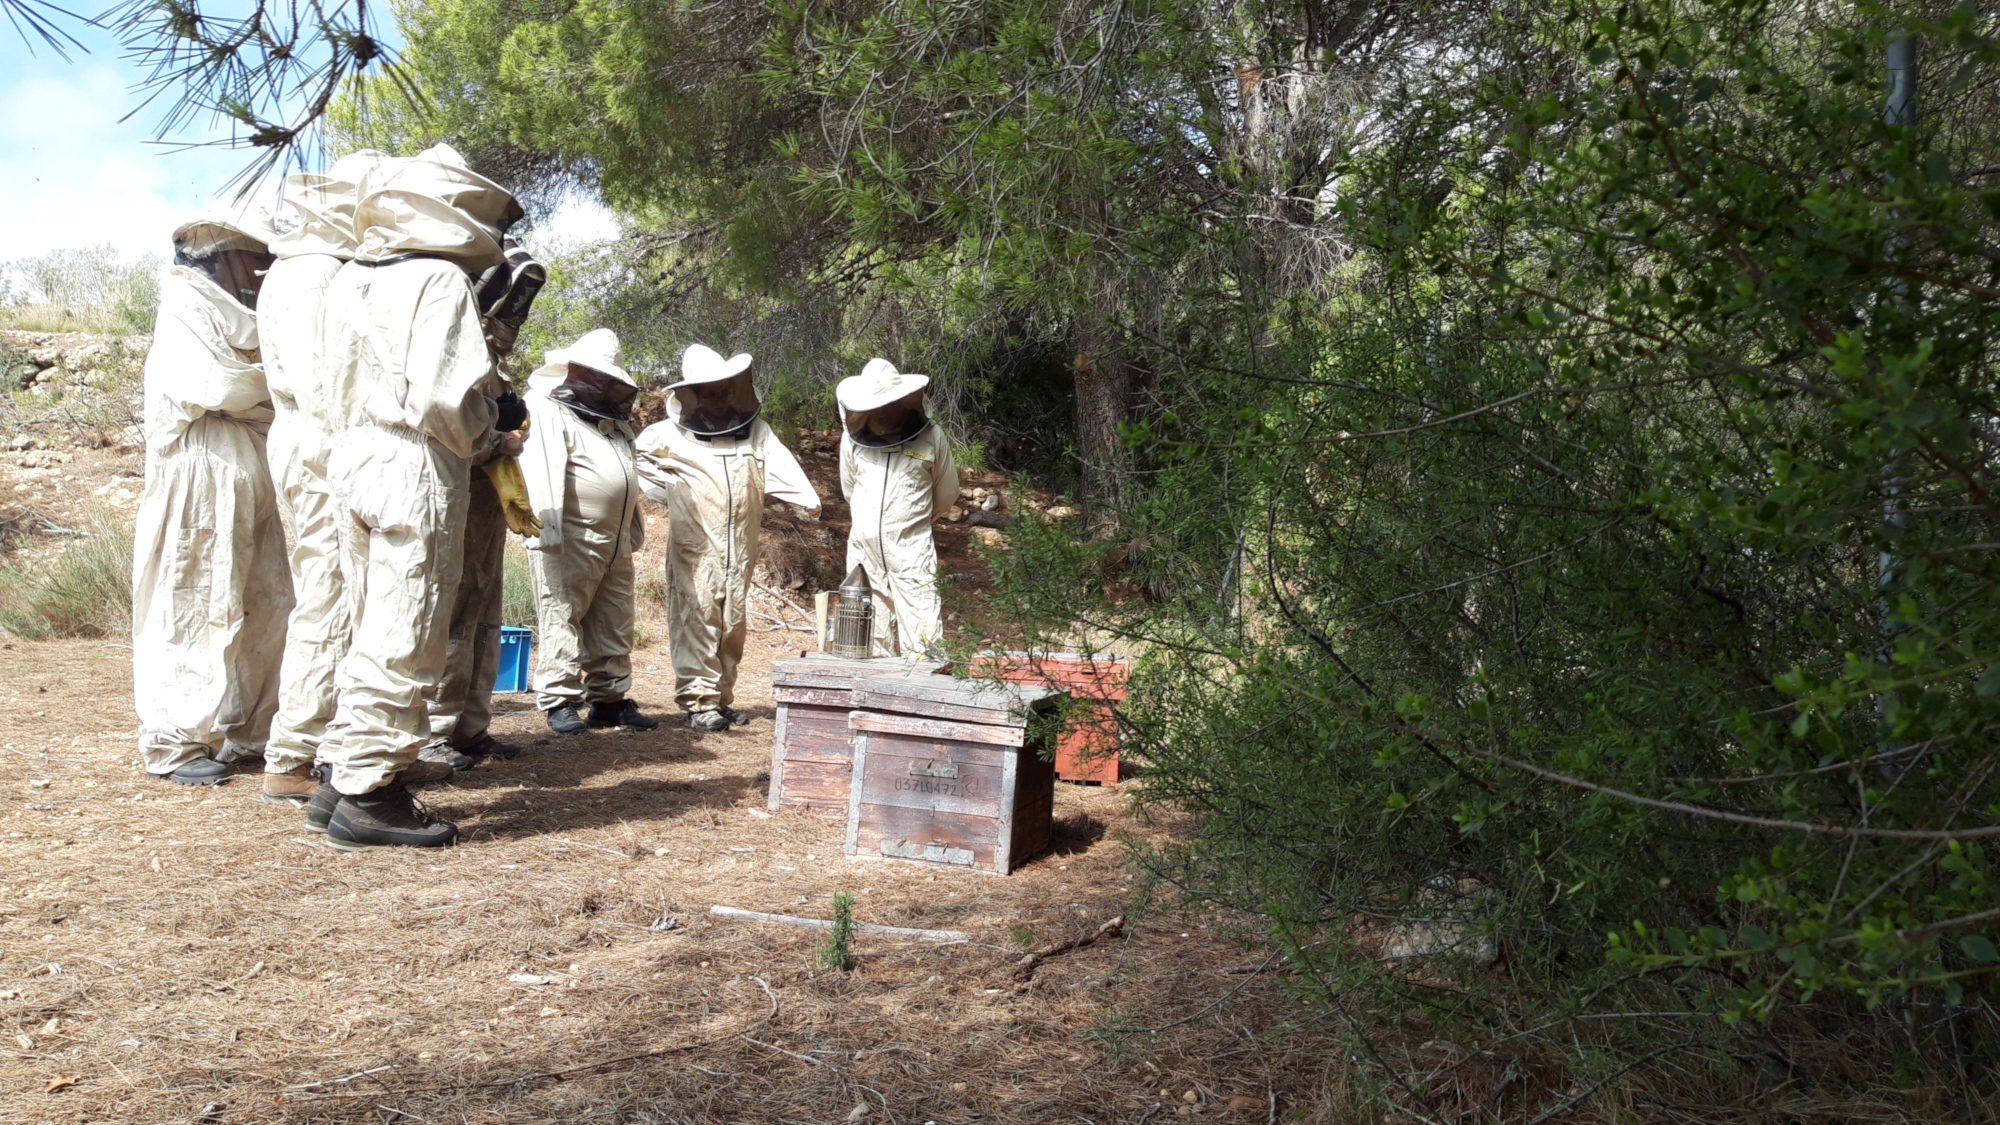 Abrint caixes d'abelles